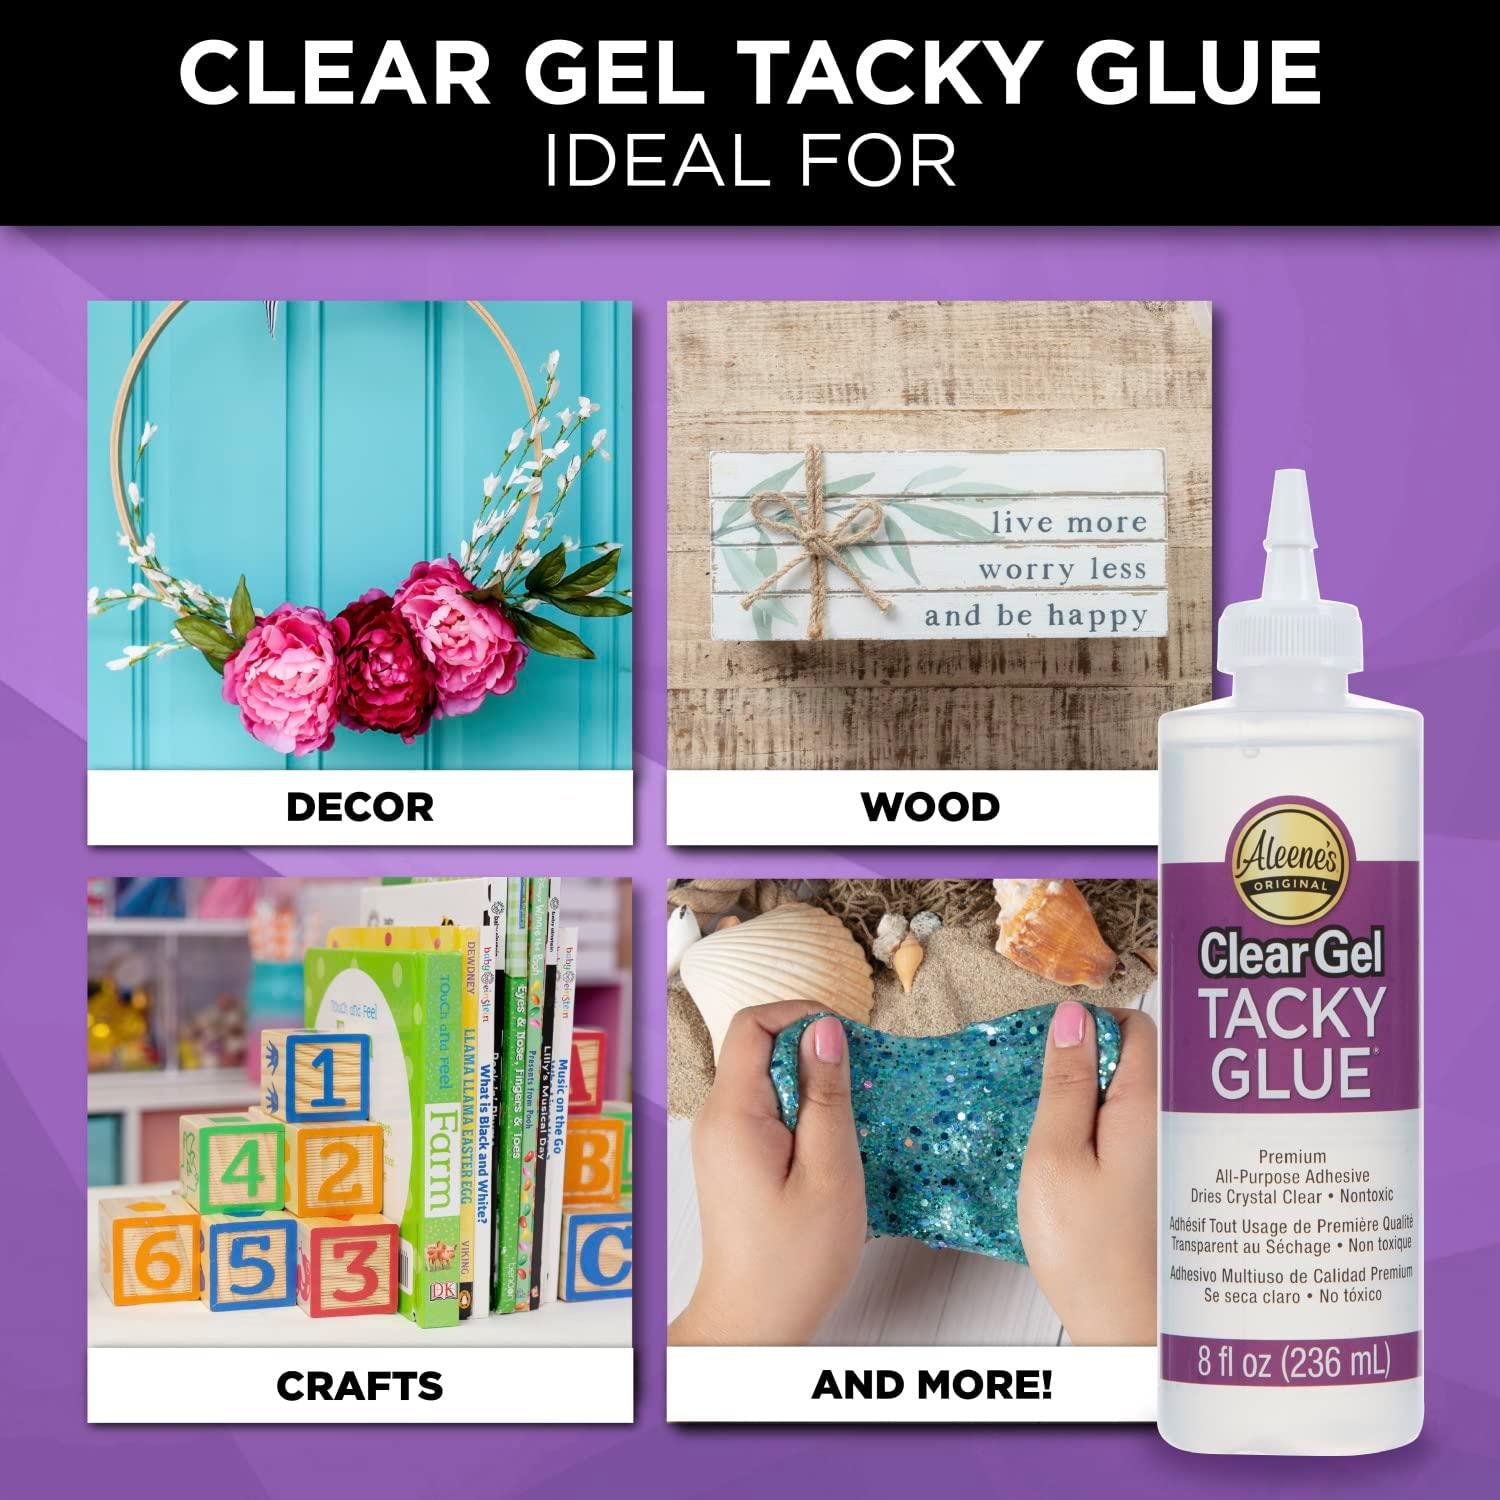 Aleene's Original Glues - Easy Tacky Glue Slime